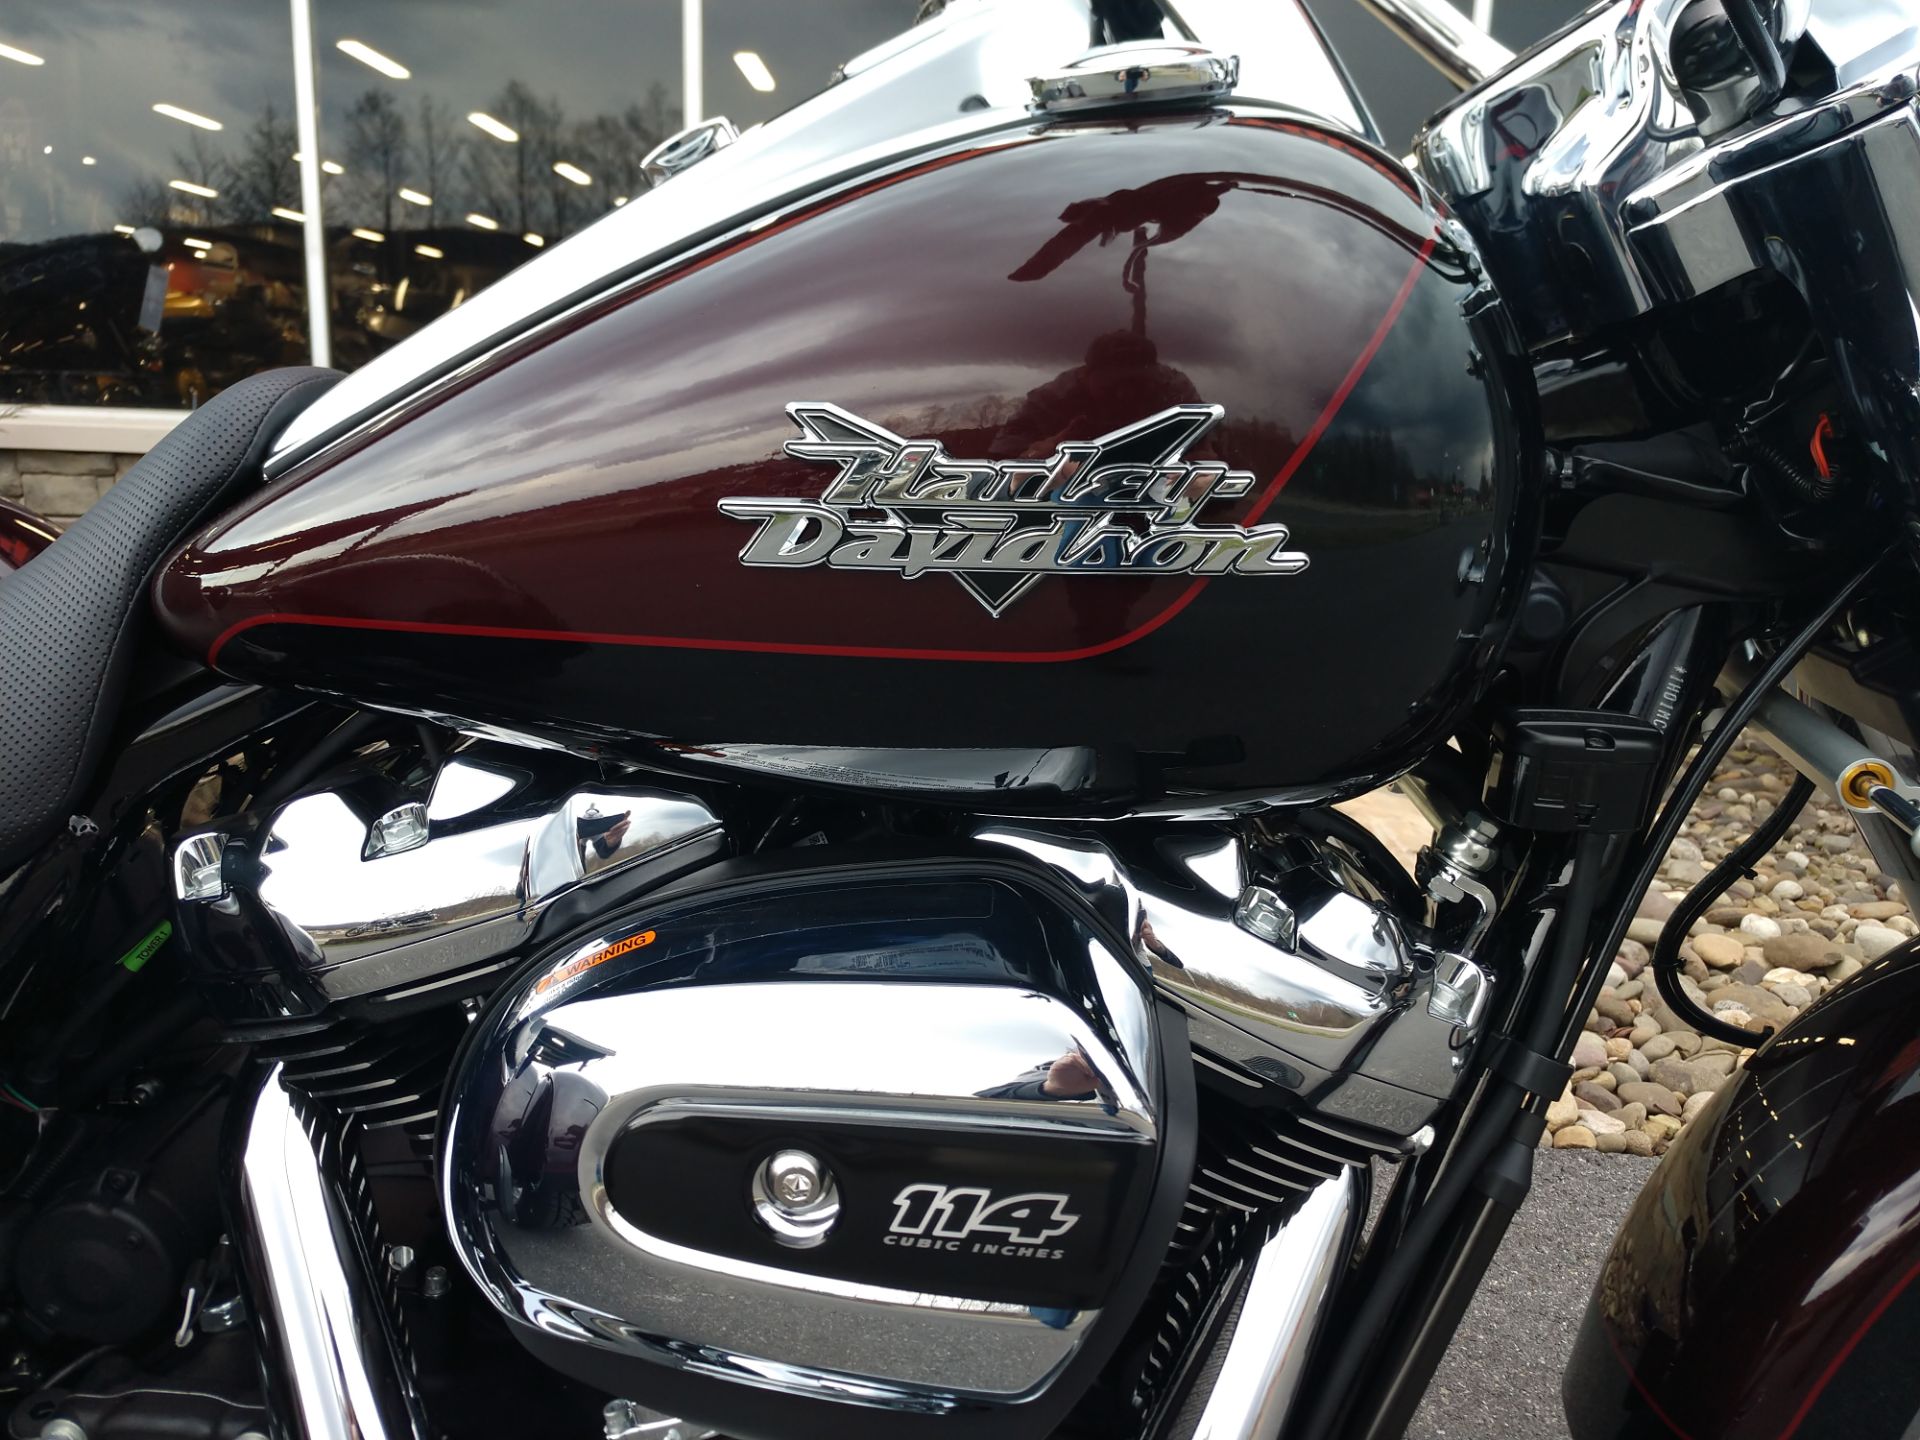 2022 Harley-Davidson Freewheeler® in Duncansville, Pennsylvania - Photo 3